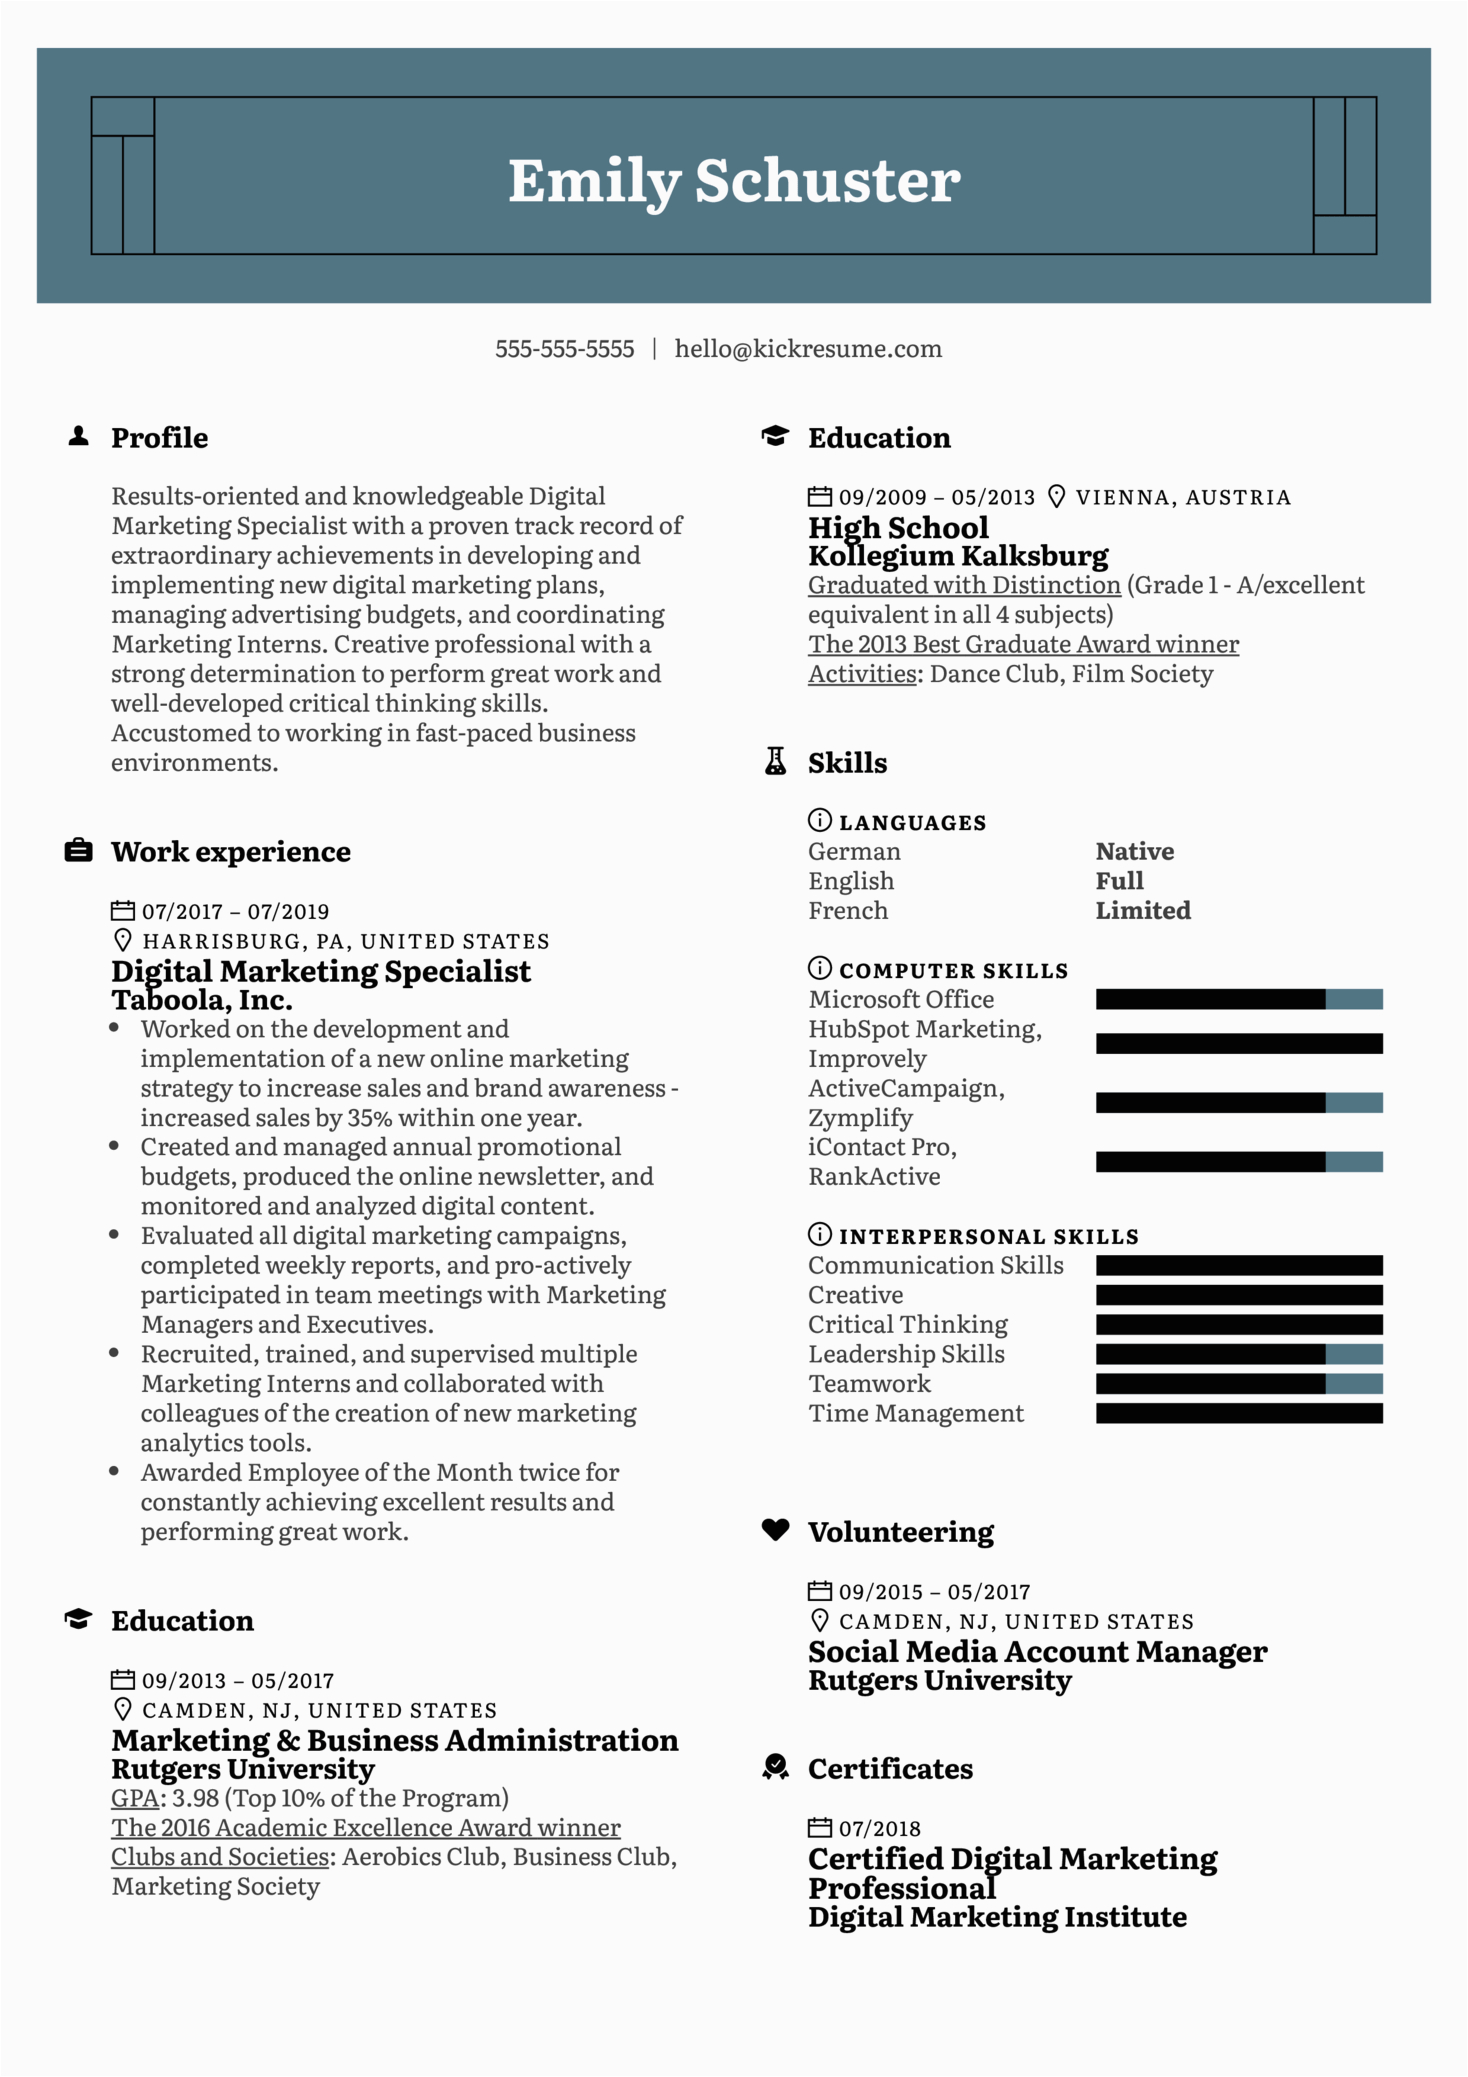 Sample Resume for Digital Marketing Specialist Digital Marketing Specialist Resume Sample